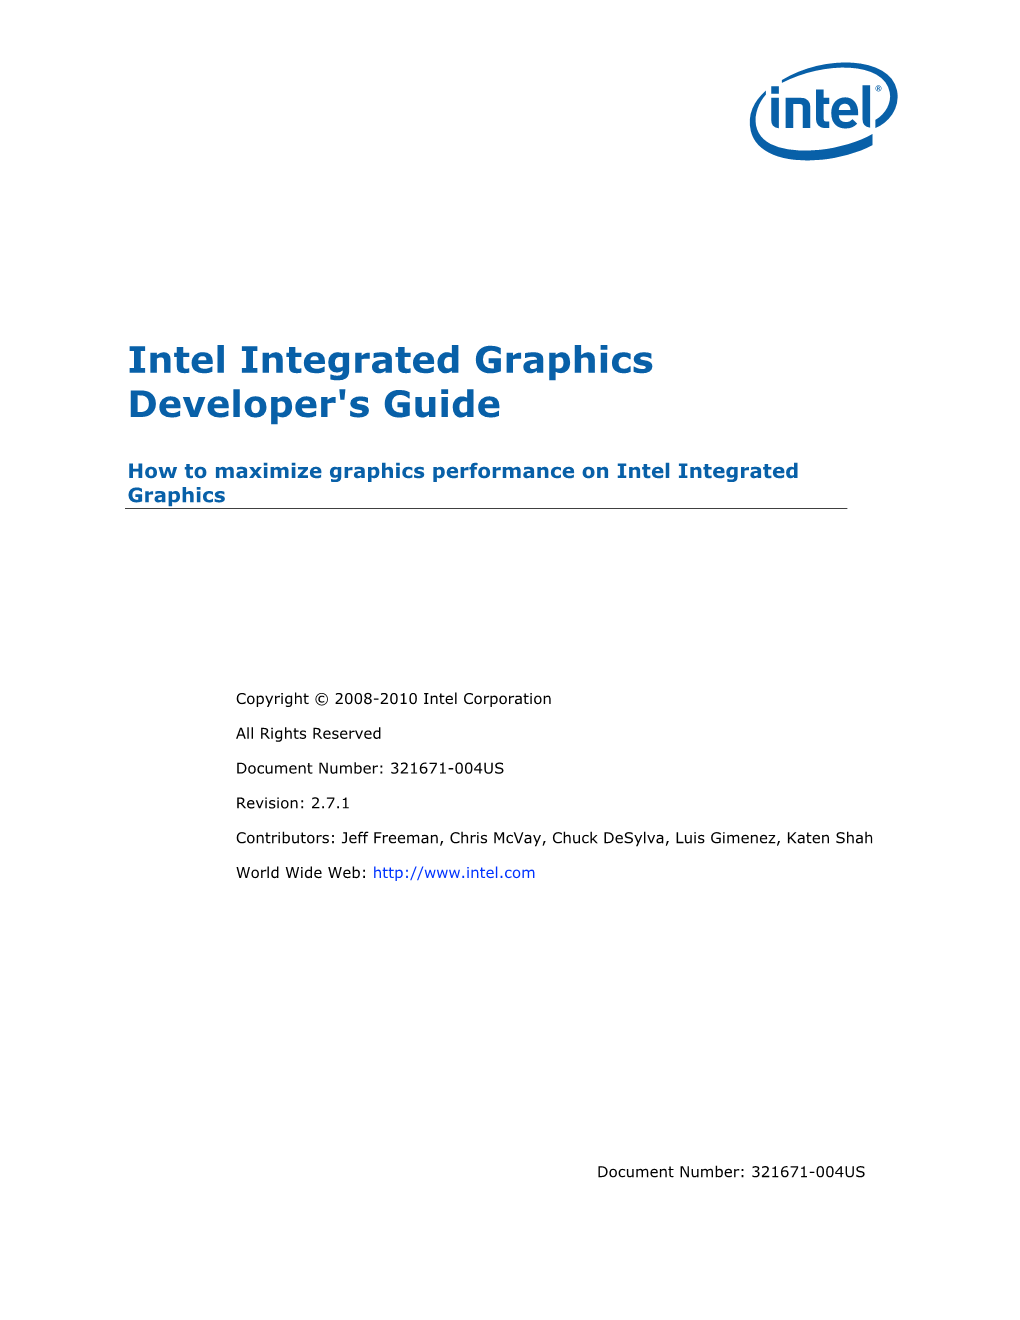 Intel Integrated Graphics Developer's Guide